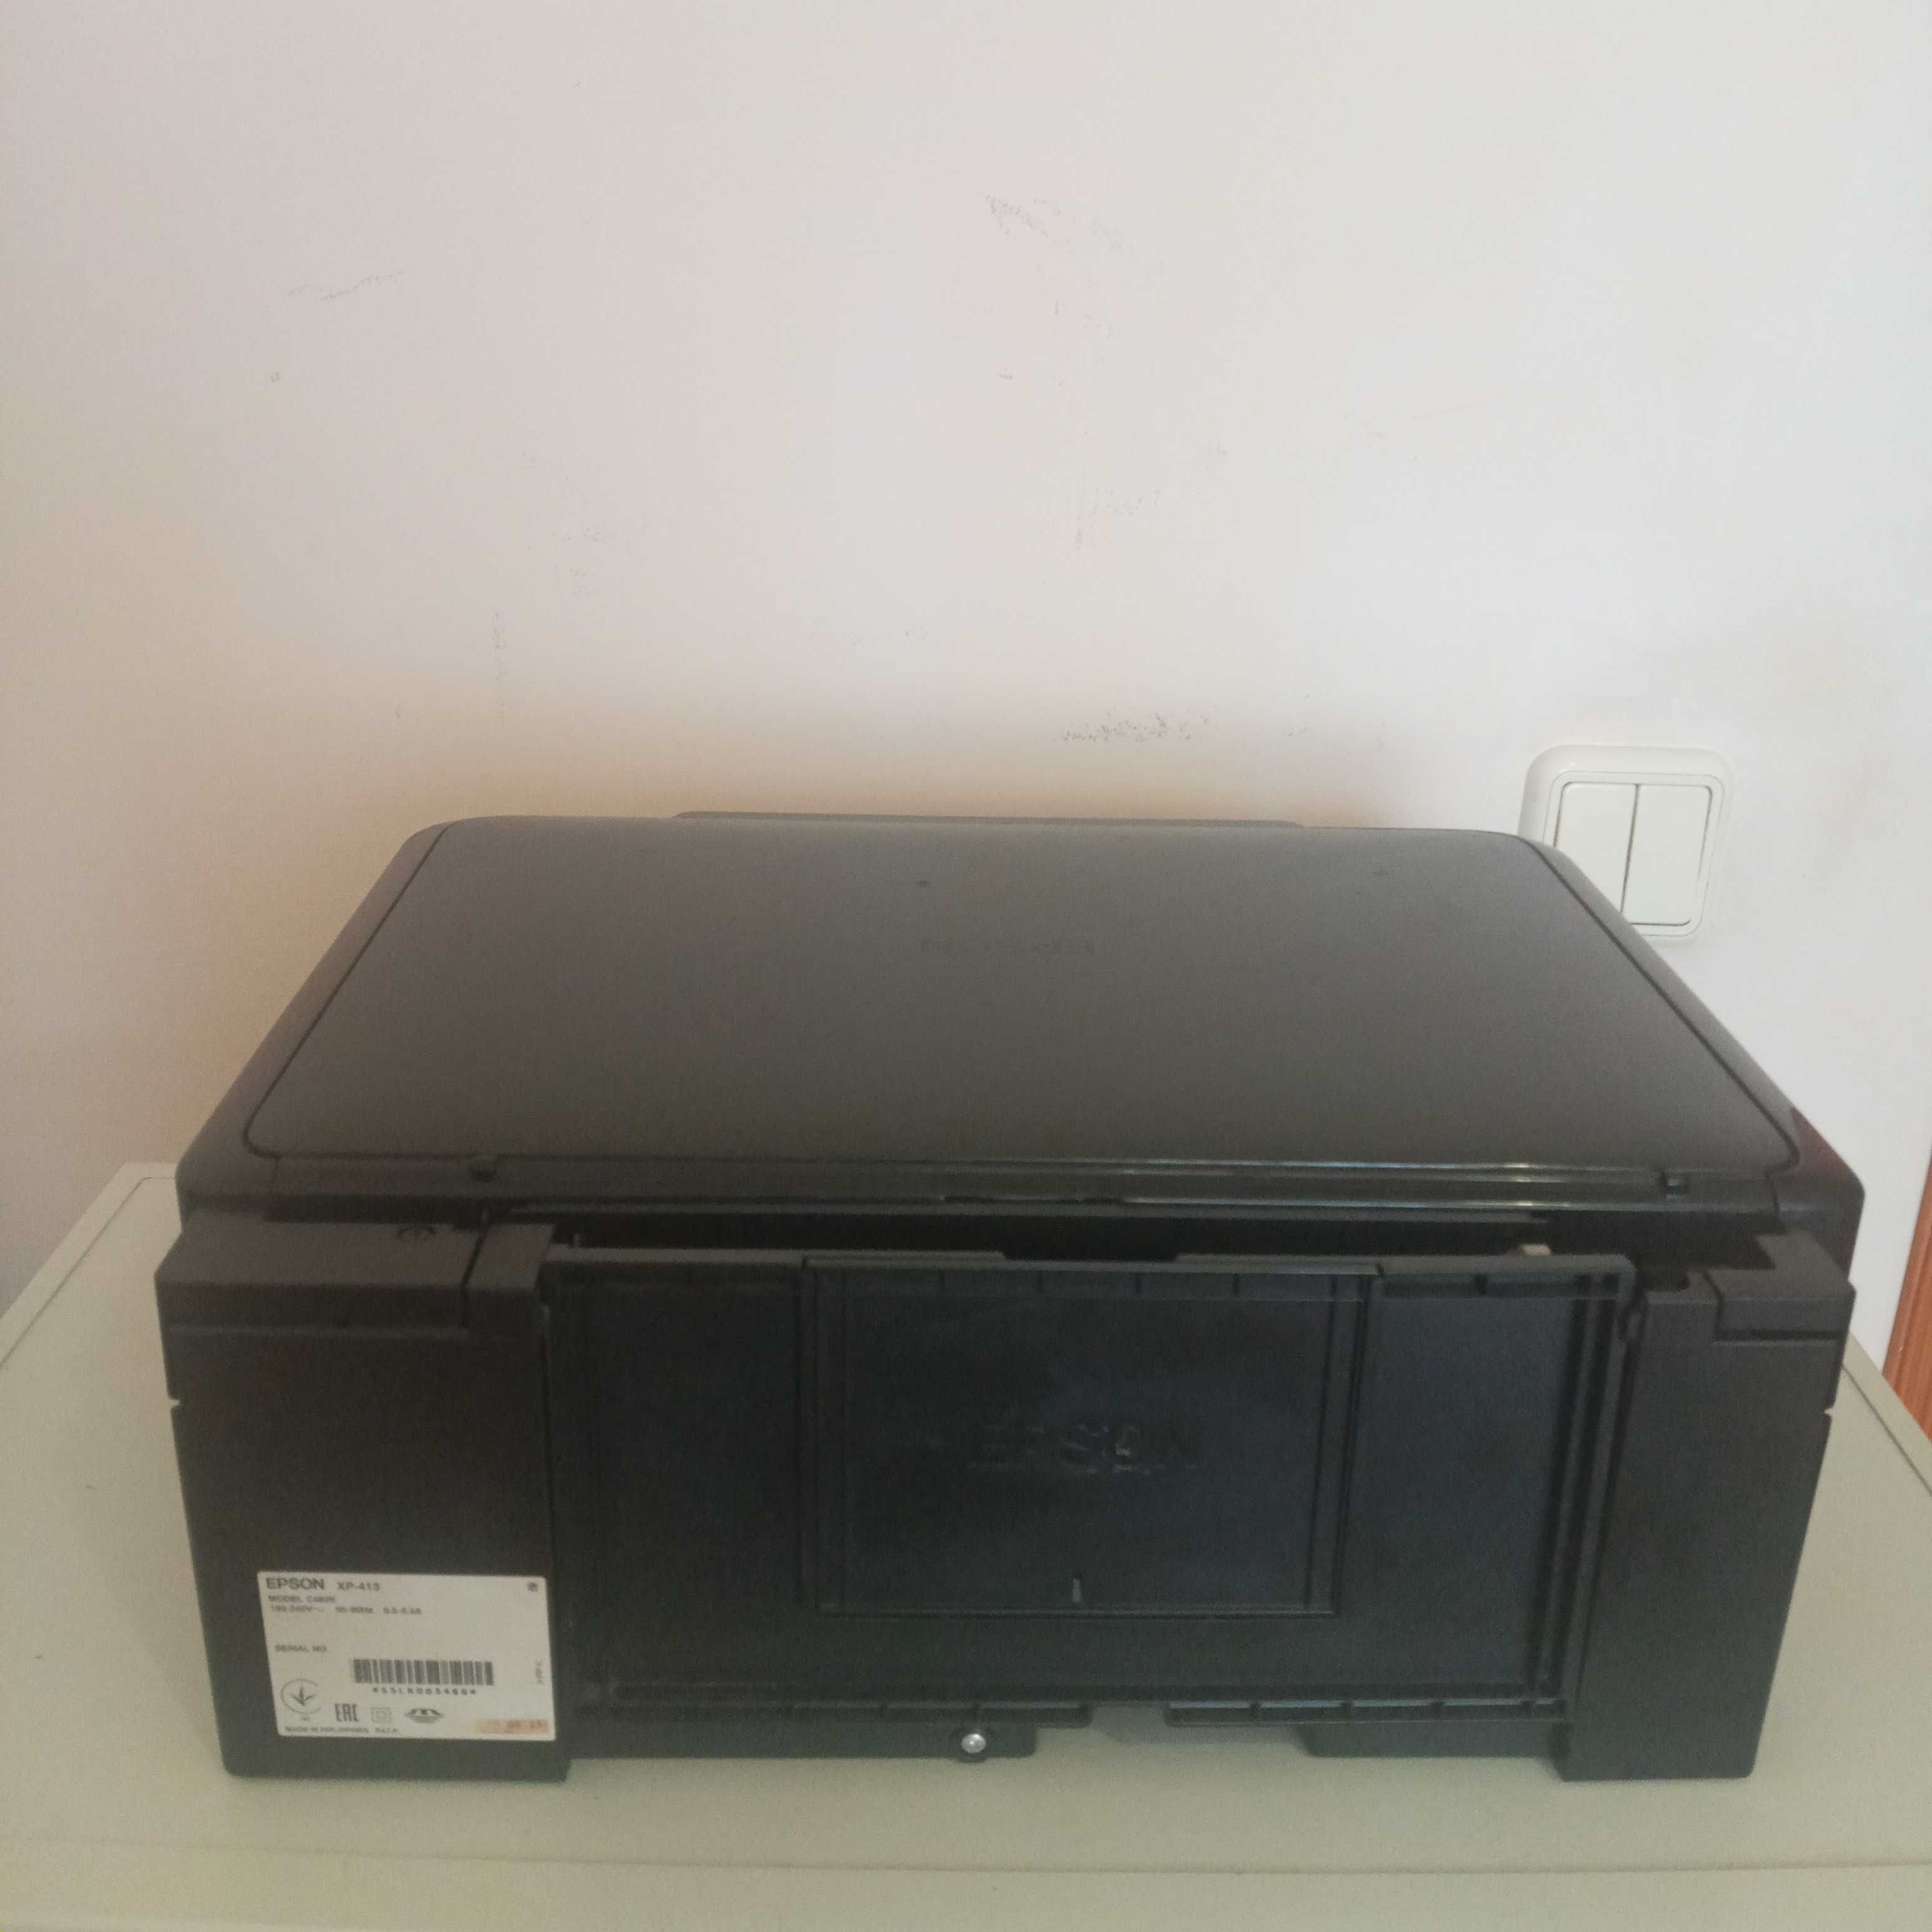 Epson XP - 413 принтер/сканер/копир